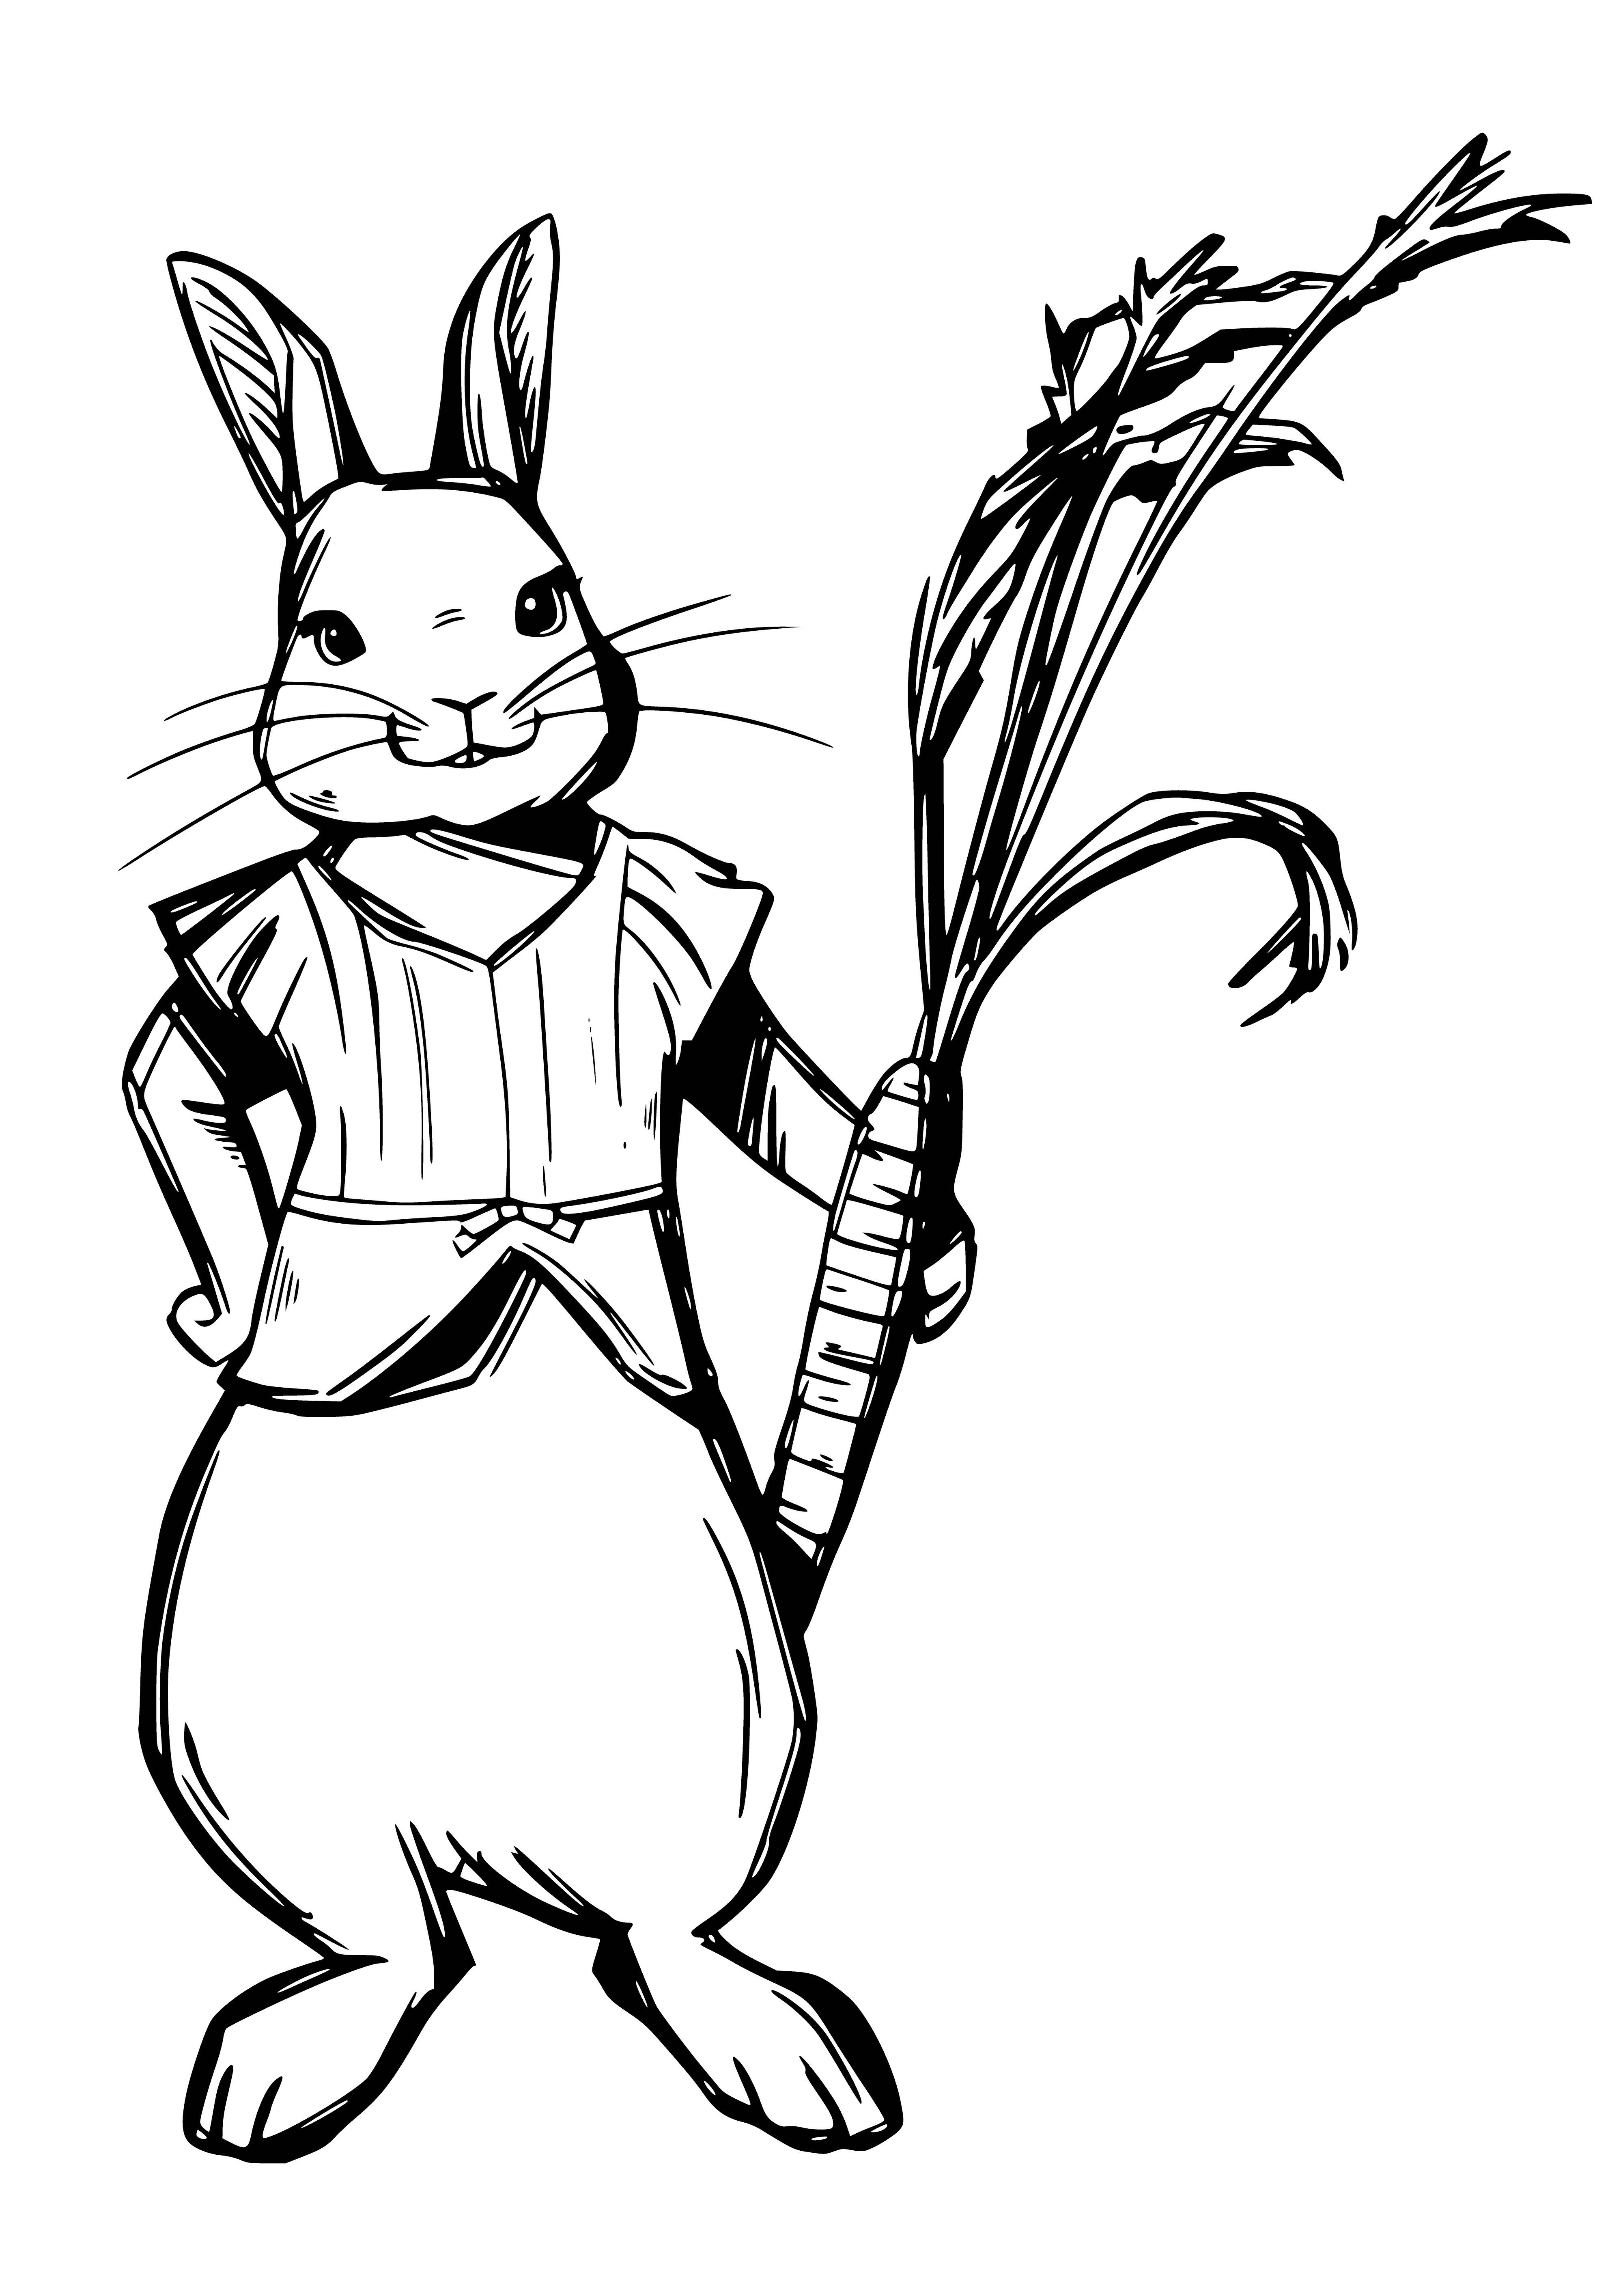 Peter Rabbit's Big Sister - Mopsy coloring page